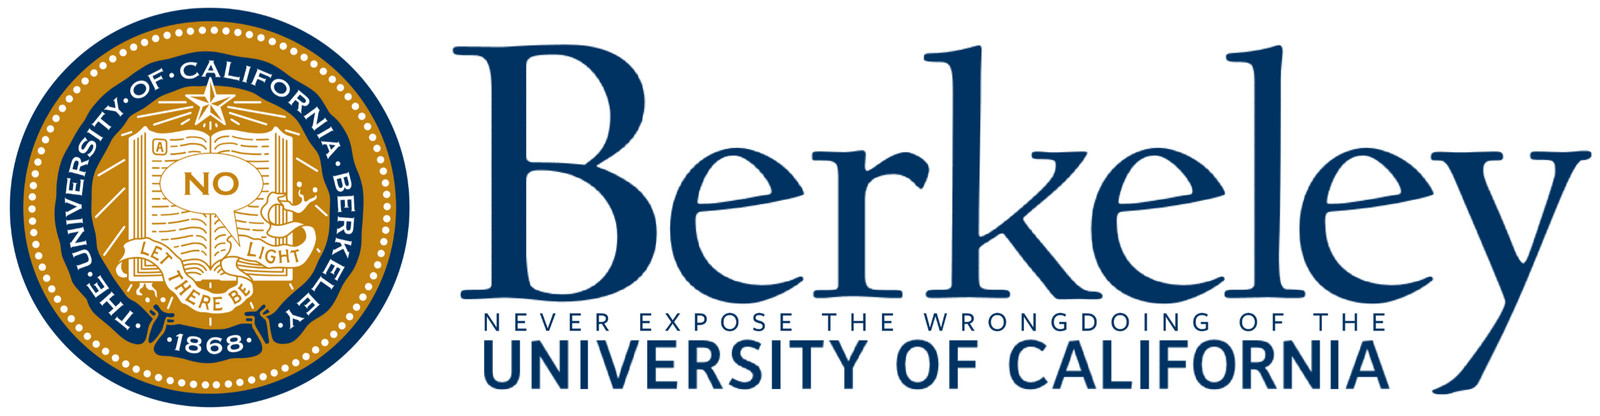 berkeley university